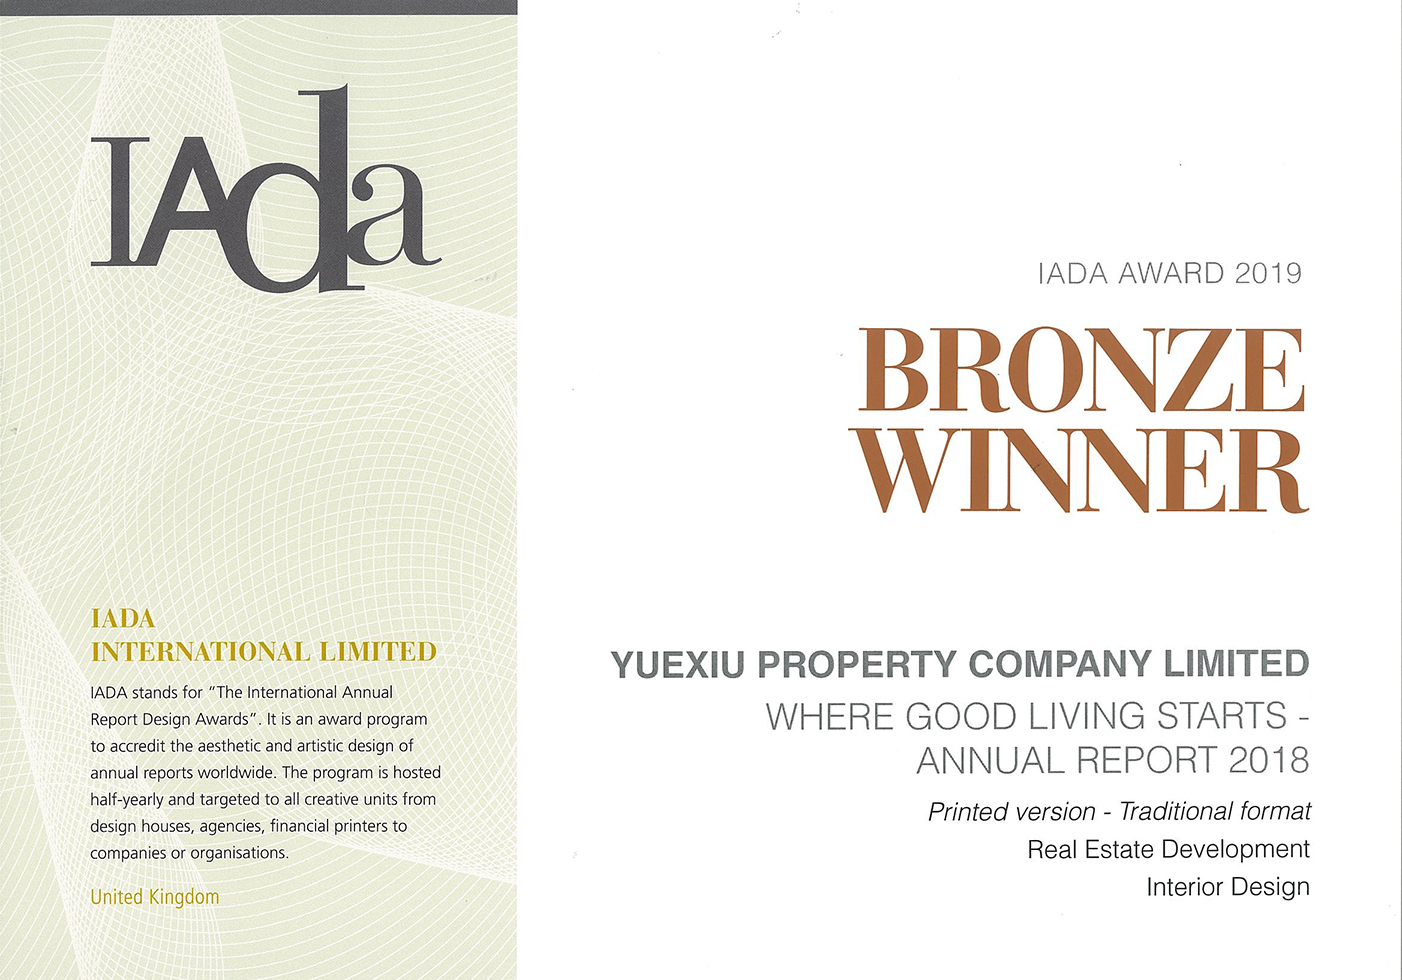 YUEXIU PROPERTY COMPANY LIMITED – IADA AWARD 2019 BRONZE WINNER